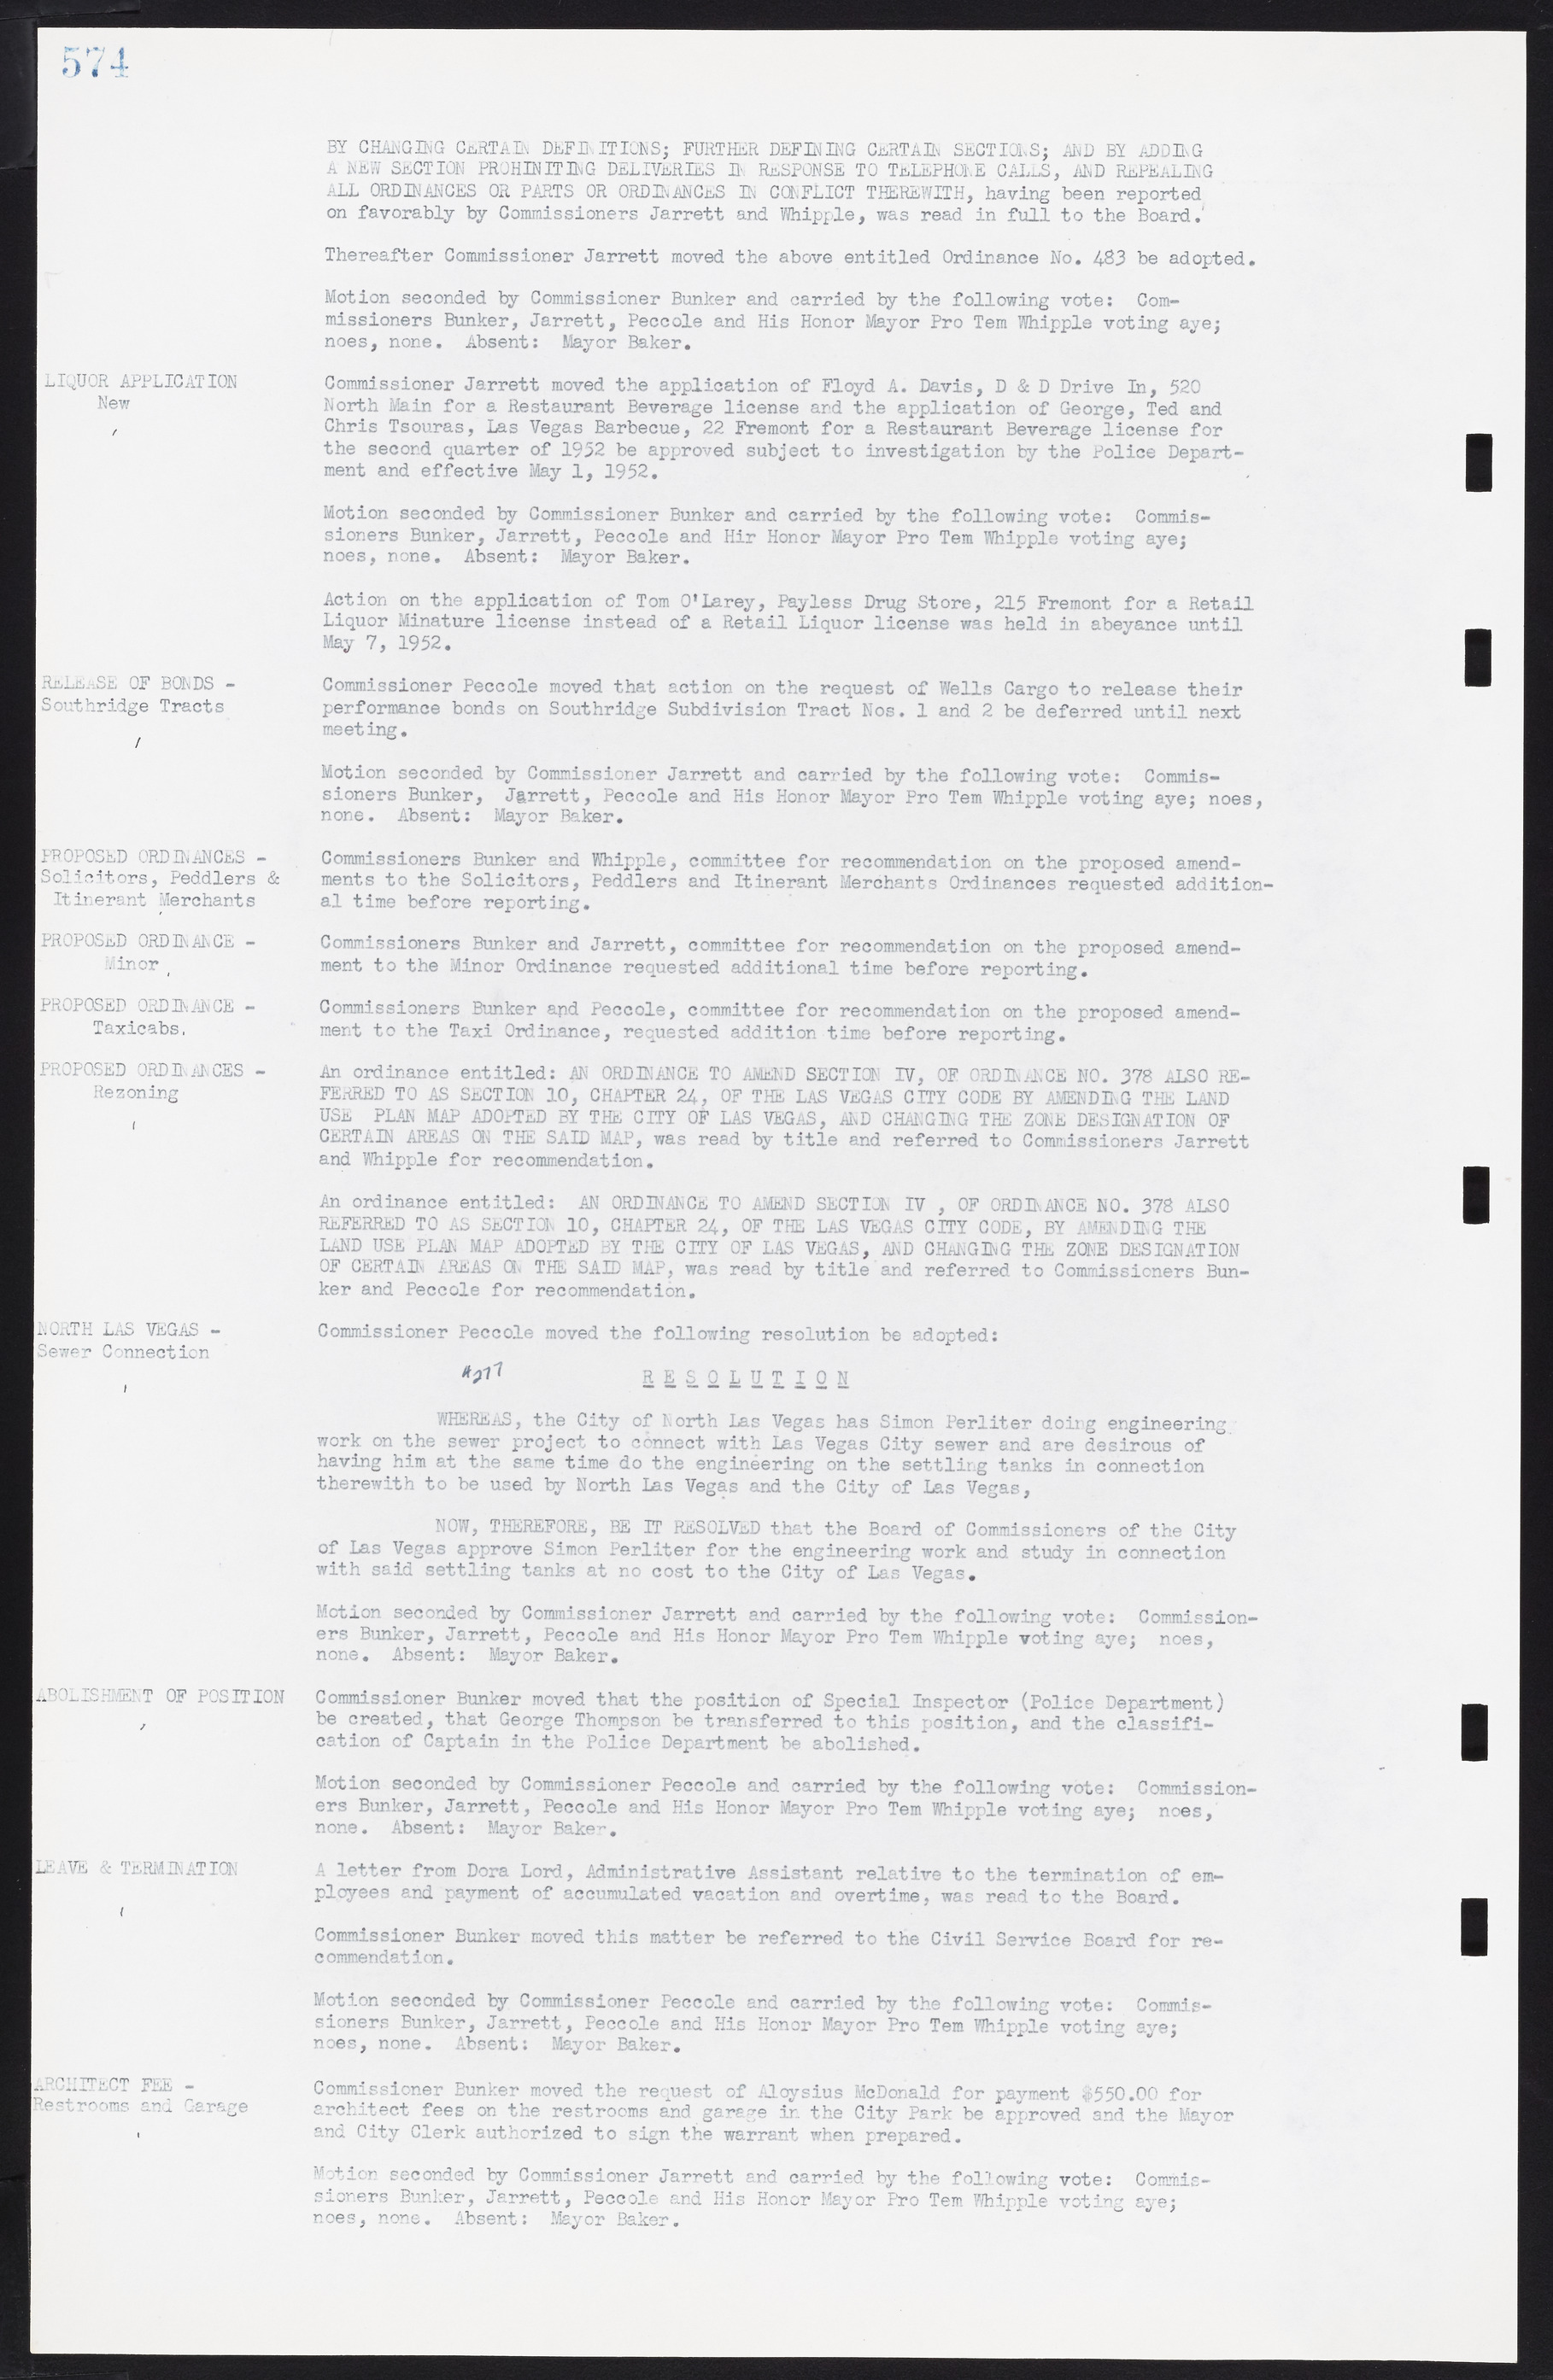 Las Vegas City Commission Minutes, November 7, 1949 to May 21, 1952, lvc000007-592